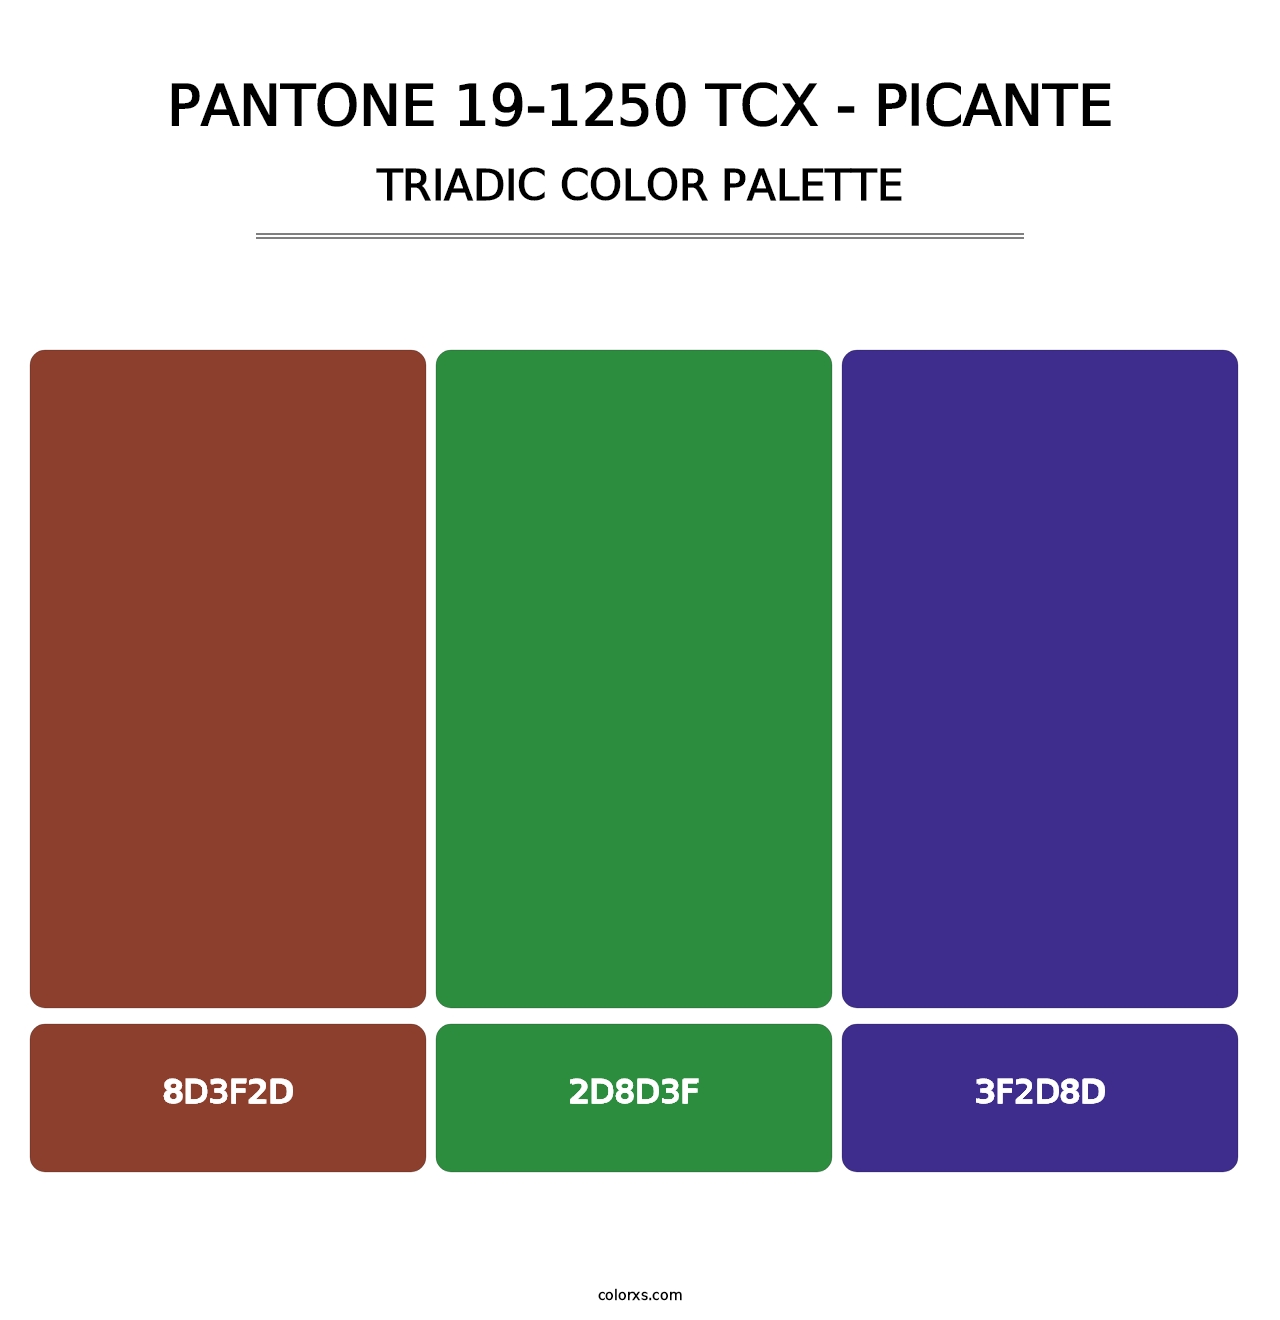 PANTONE 19-1250 TCX - Picante - Triadic Color Palette